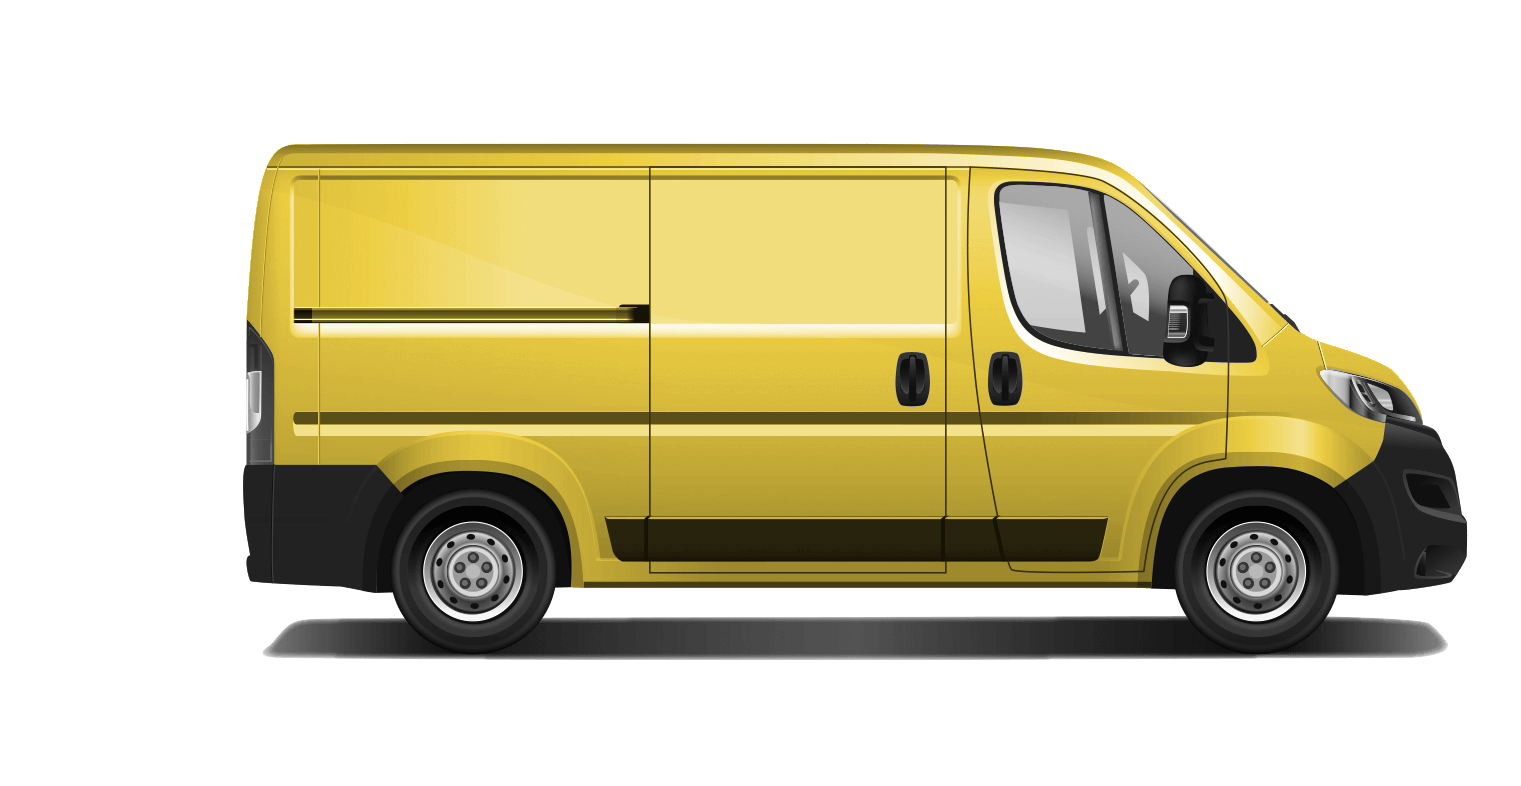 Opel Movano-e Cargo, mmg image, side view, yellow